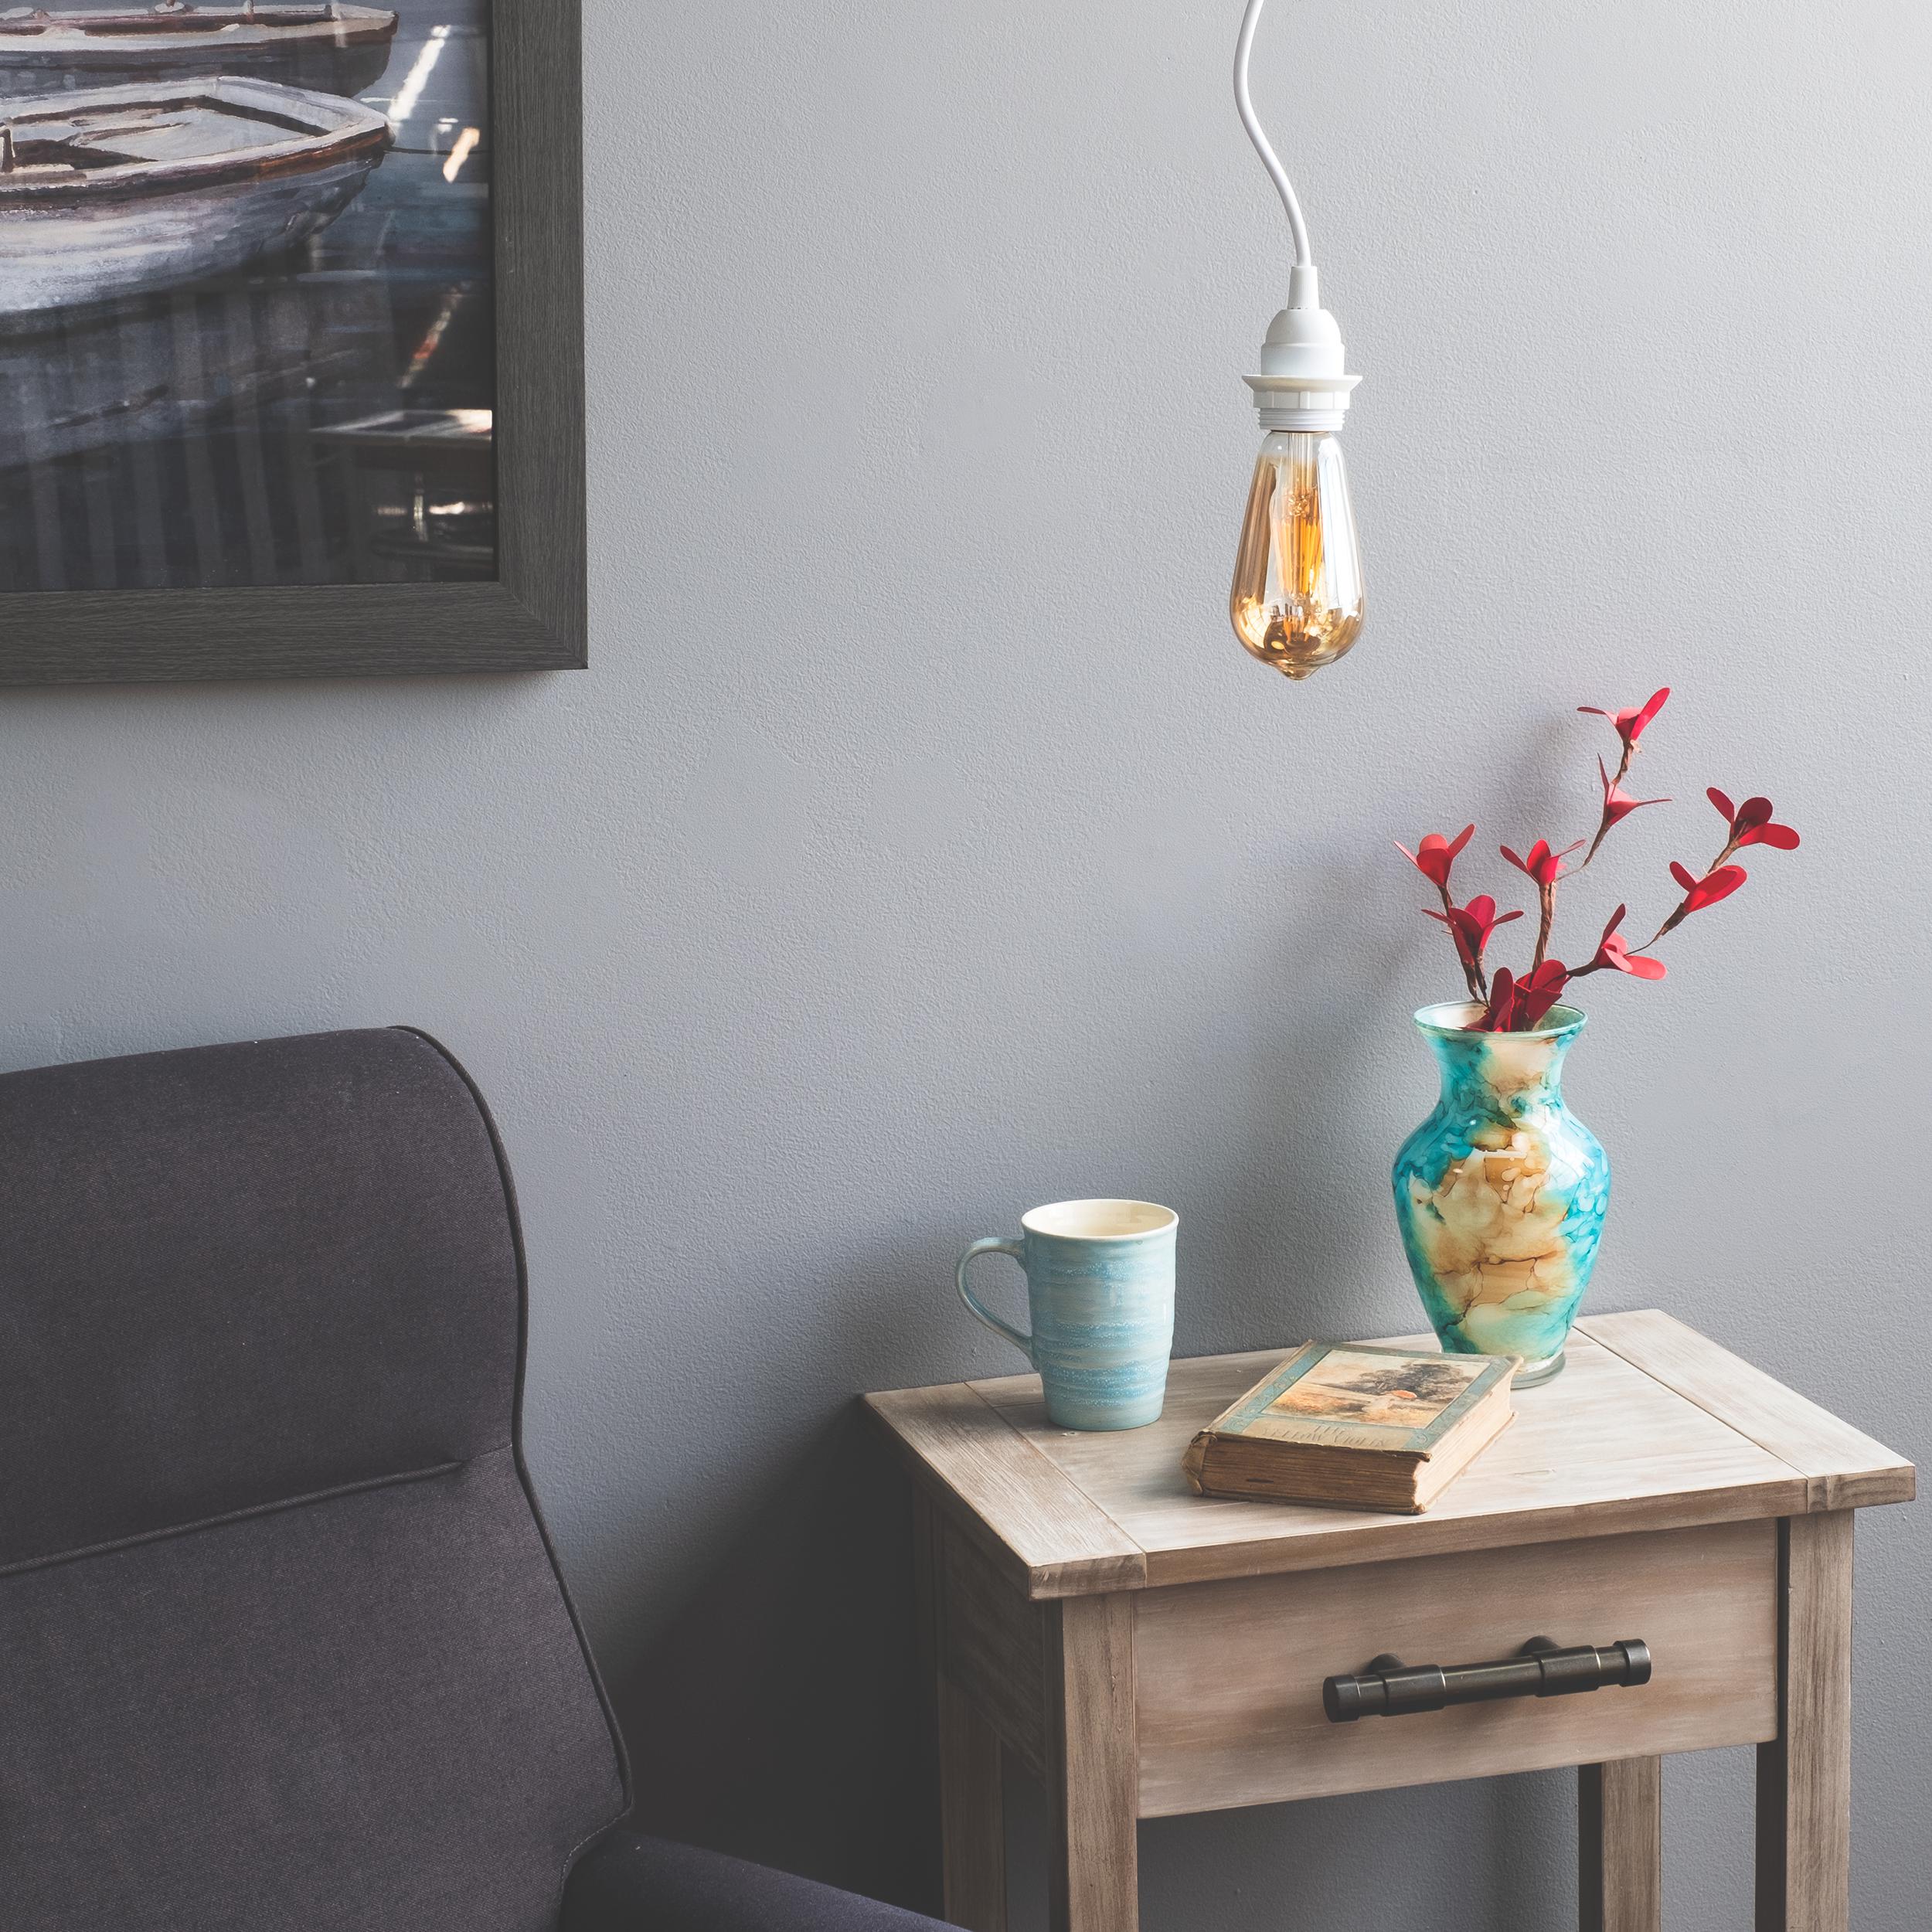 FIORE Hanging Lantern Cord Room Decor for Pendant Light Bulbs Socket - 15 Feet - Set of 1 or 5 - White - Wallniture